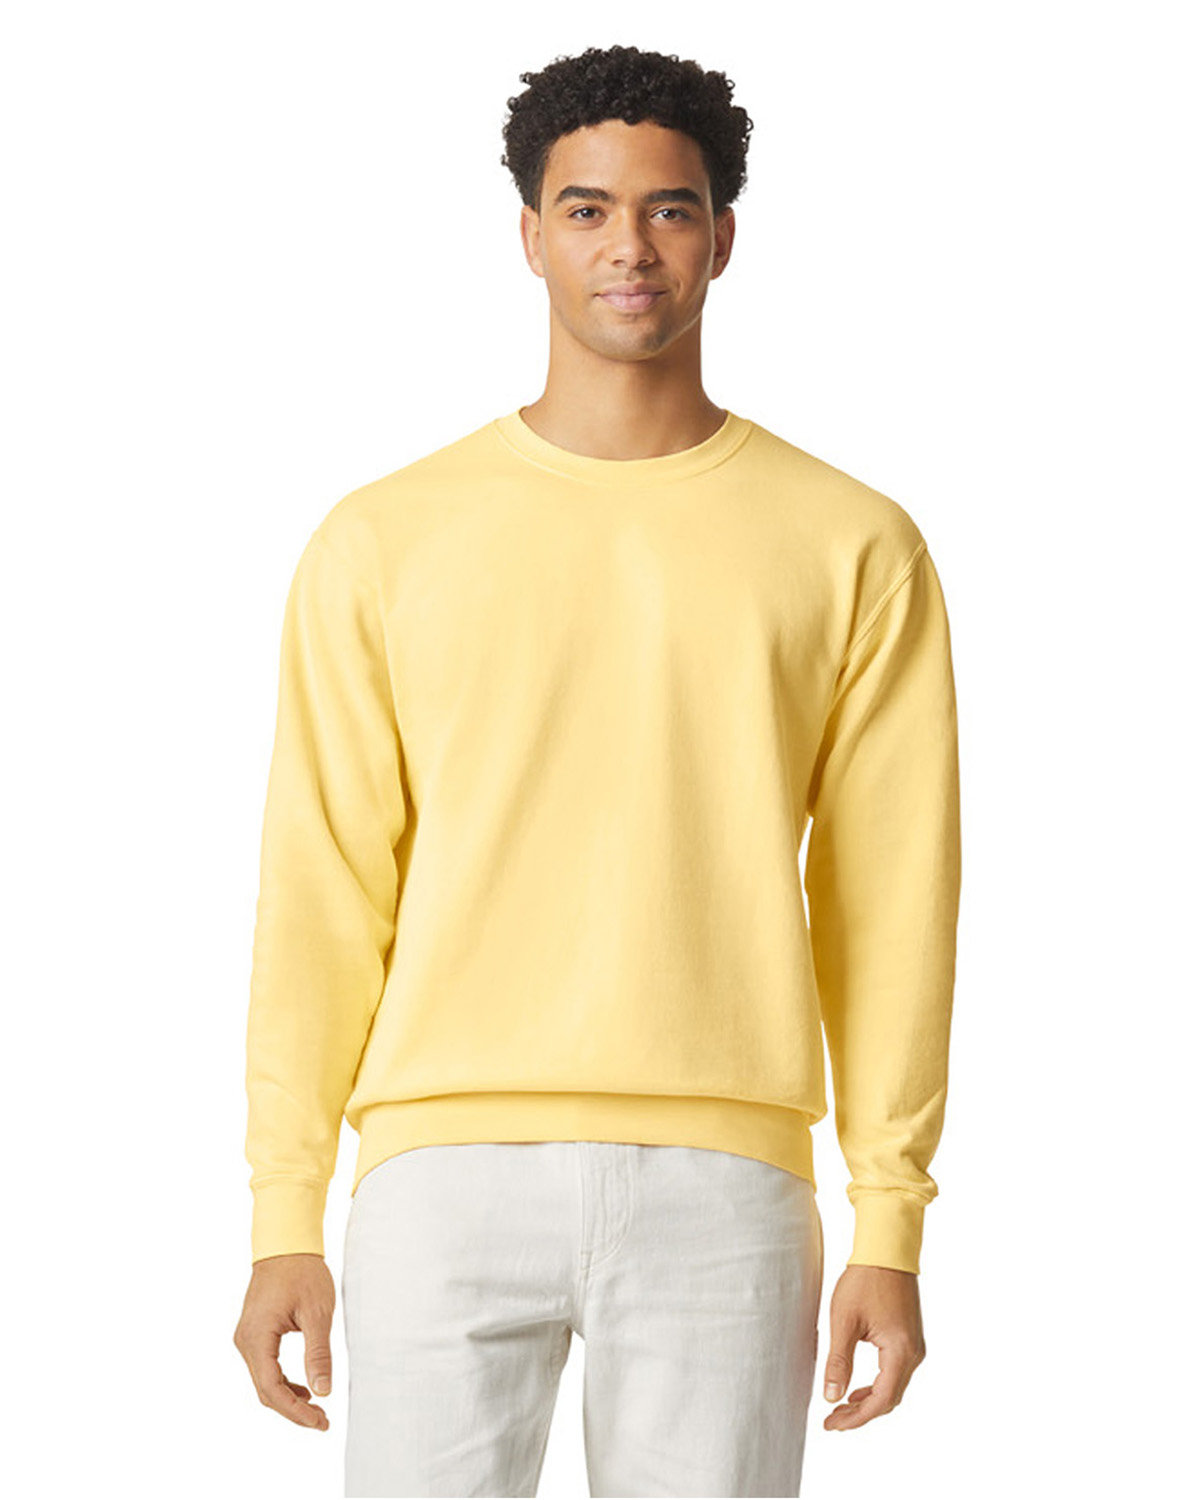 Comfort Colors 1466 - Unisex Lighweight Cotton Crewneck Sweatshirt